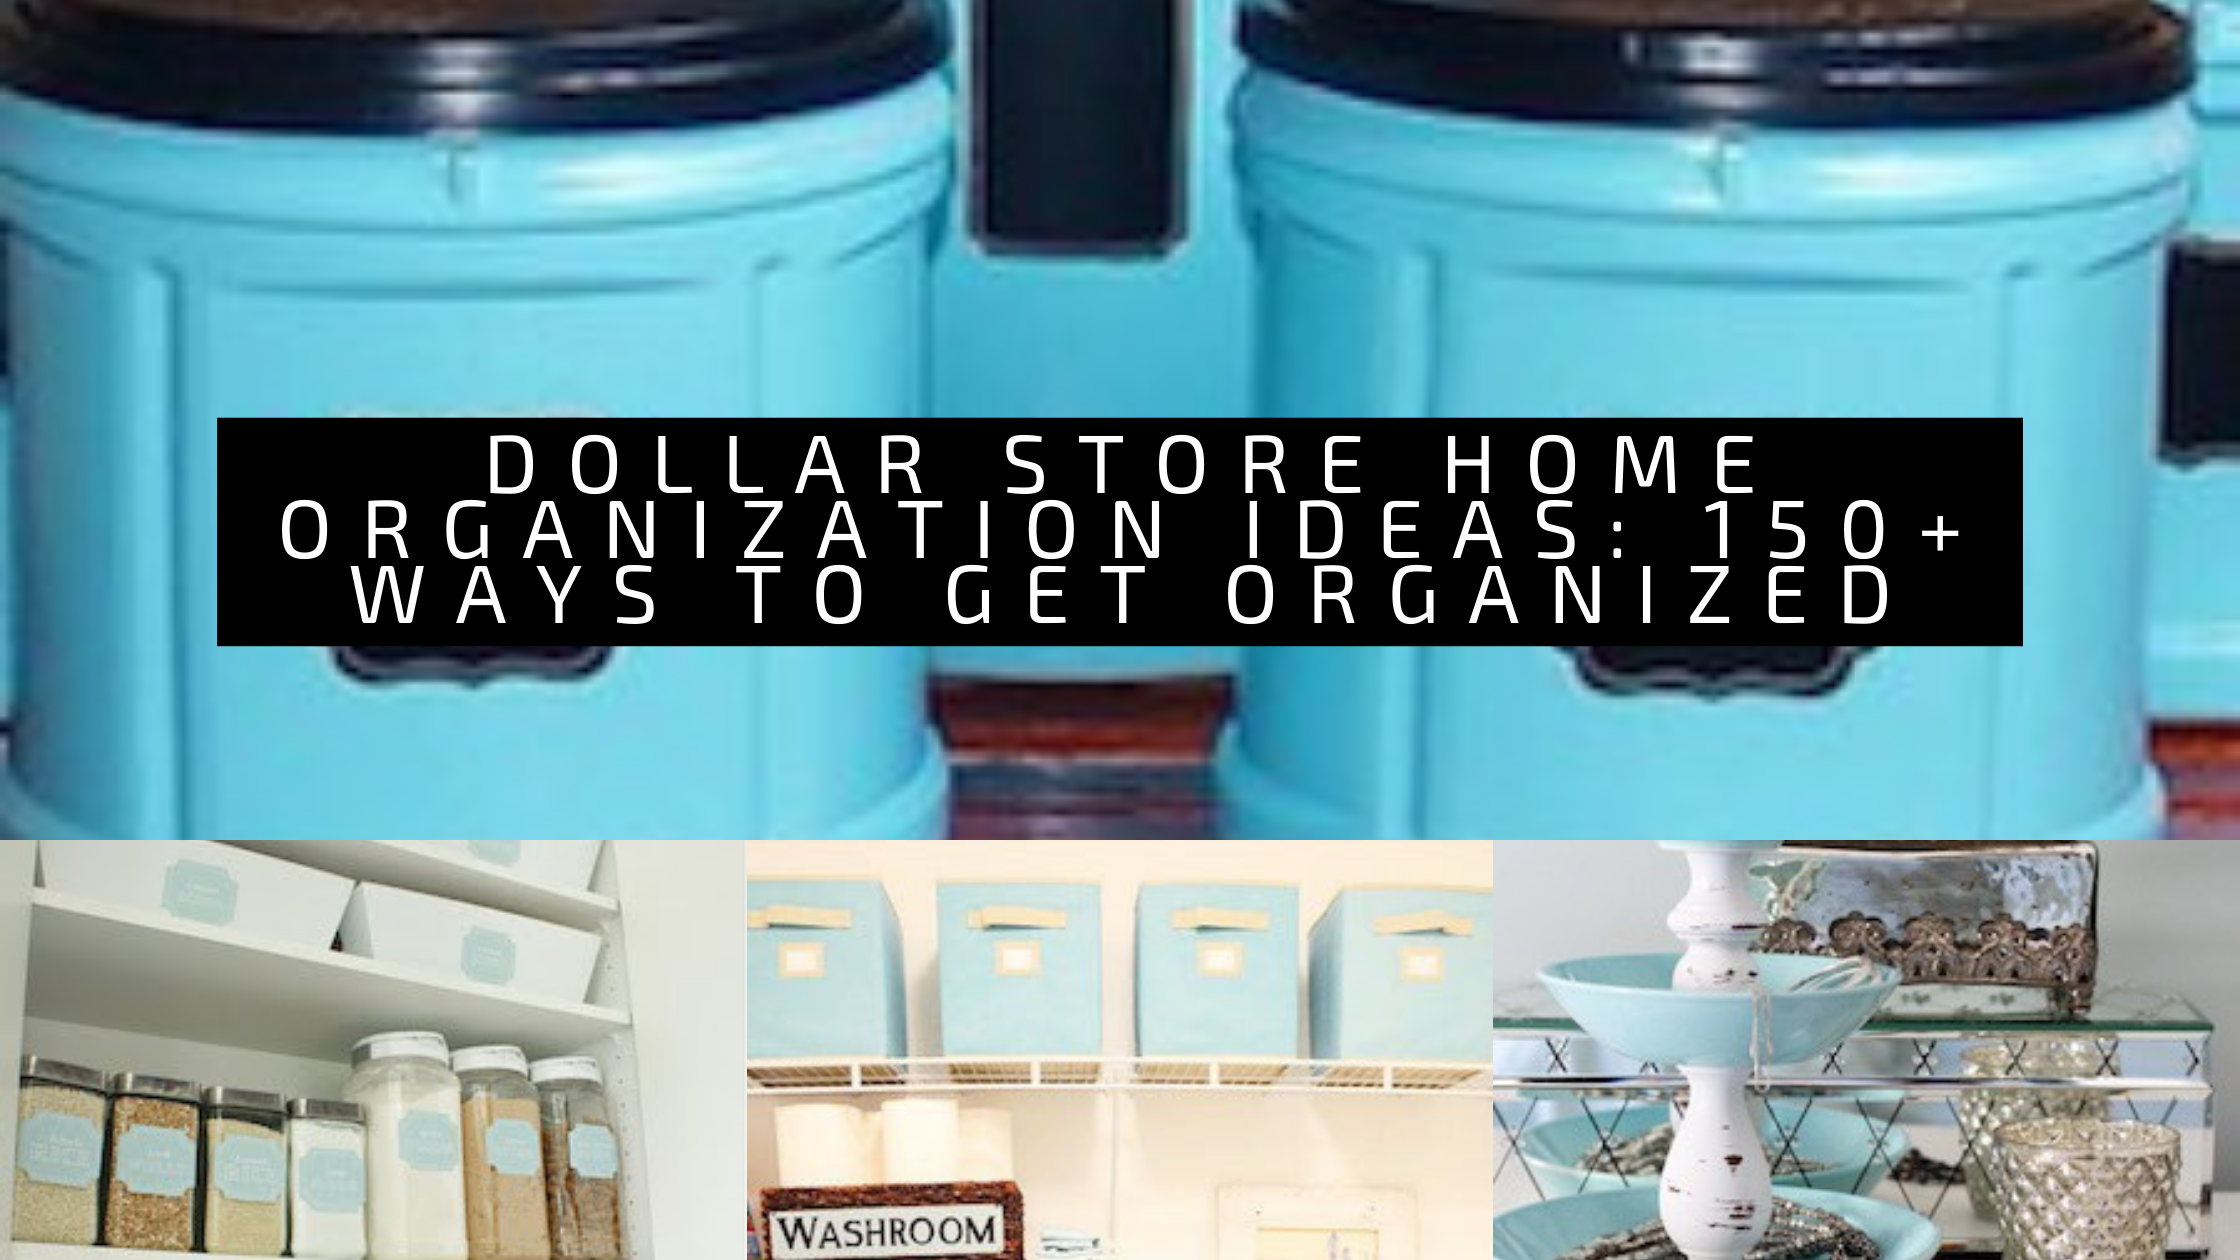 Dollar Store Home Organization Ideas: 150+ Ways to Get Organized 21